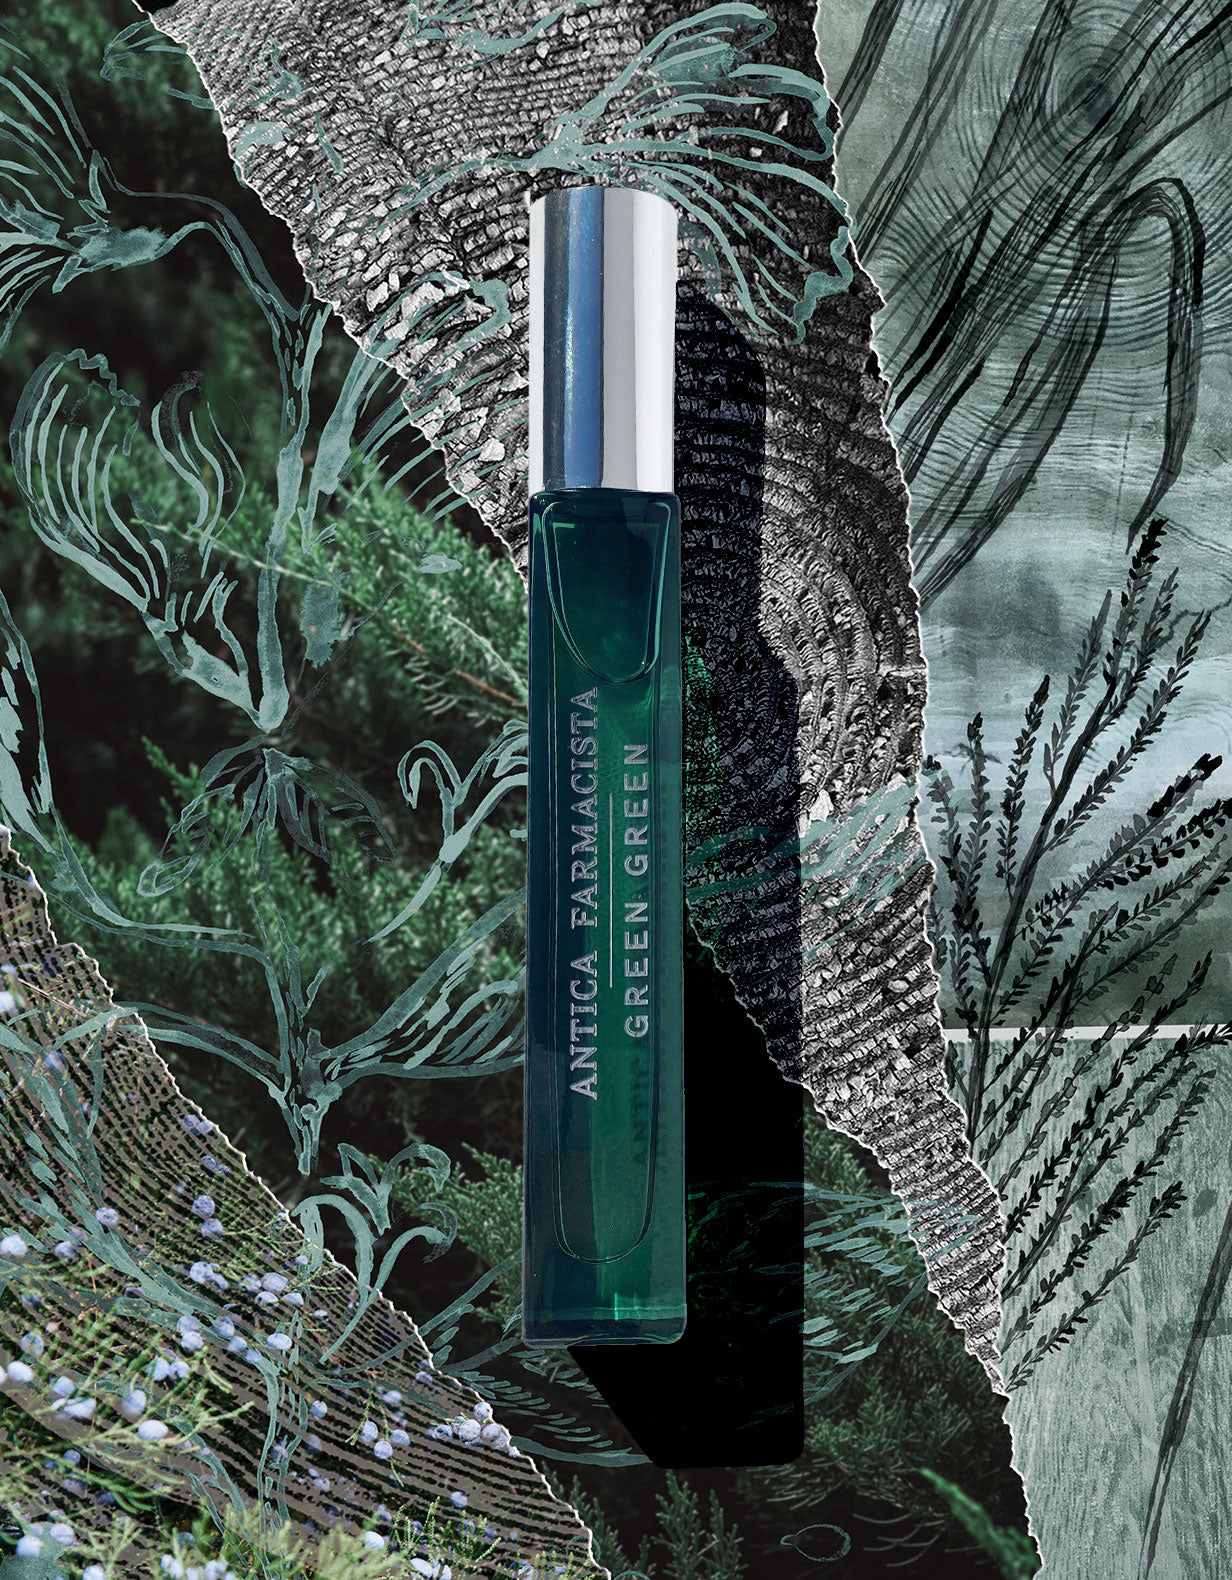 Botanical RollerBall Perfumes – Nightshift Wax Co.